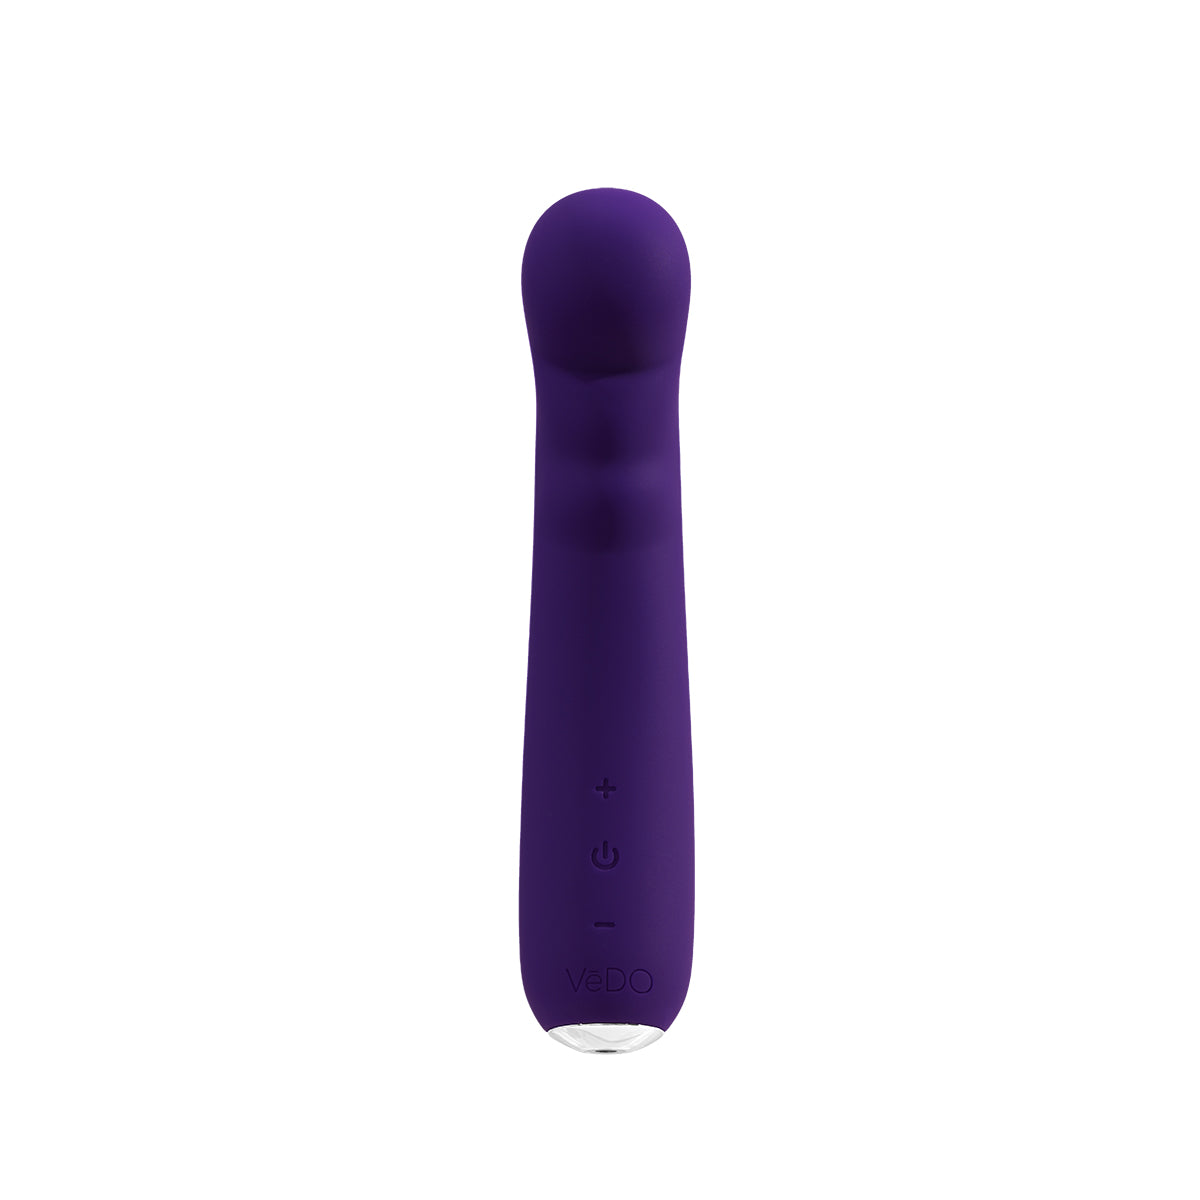 VeDO Midori G-Spot Vibe - Purple